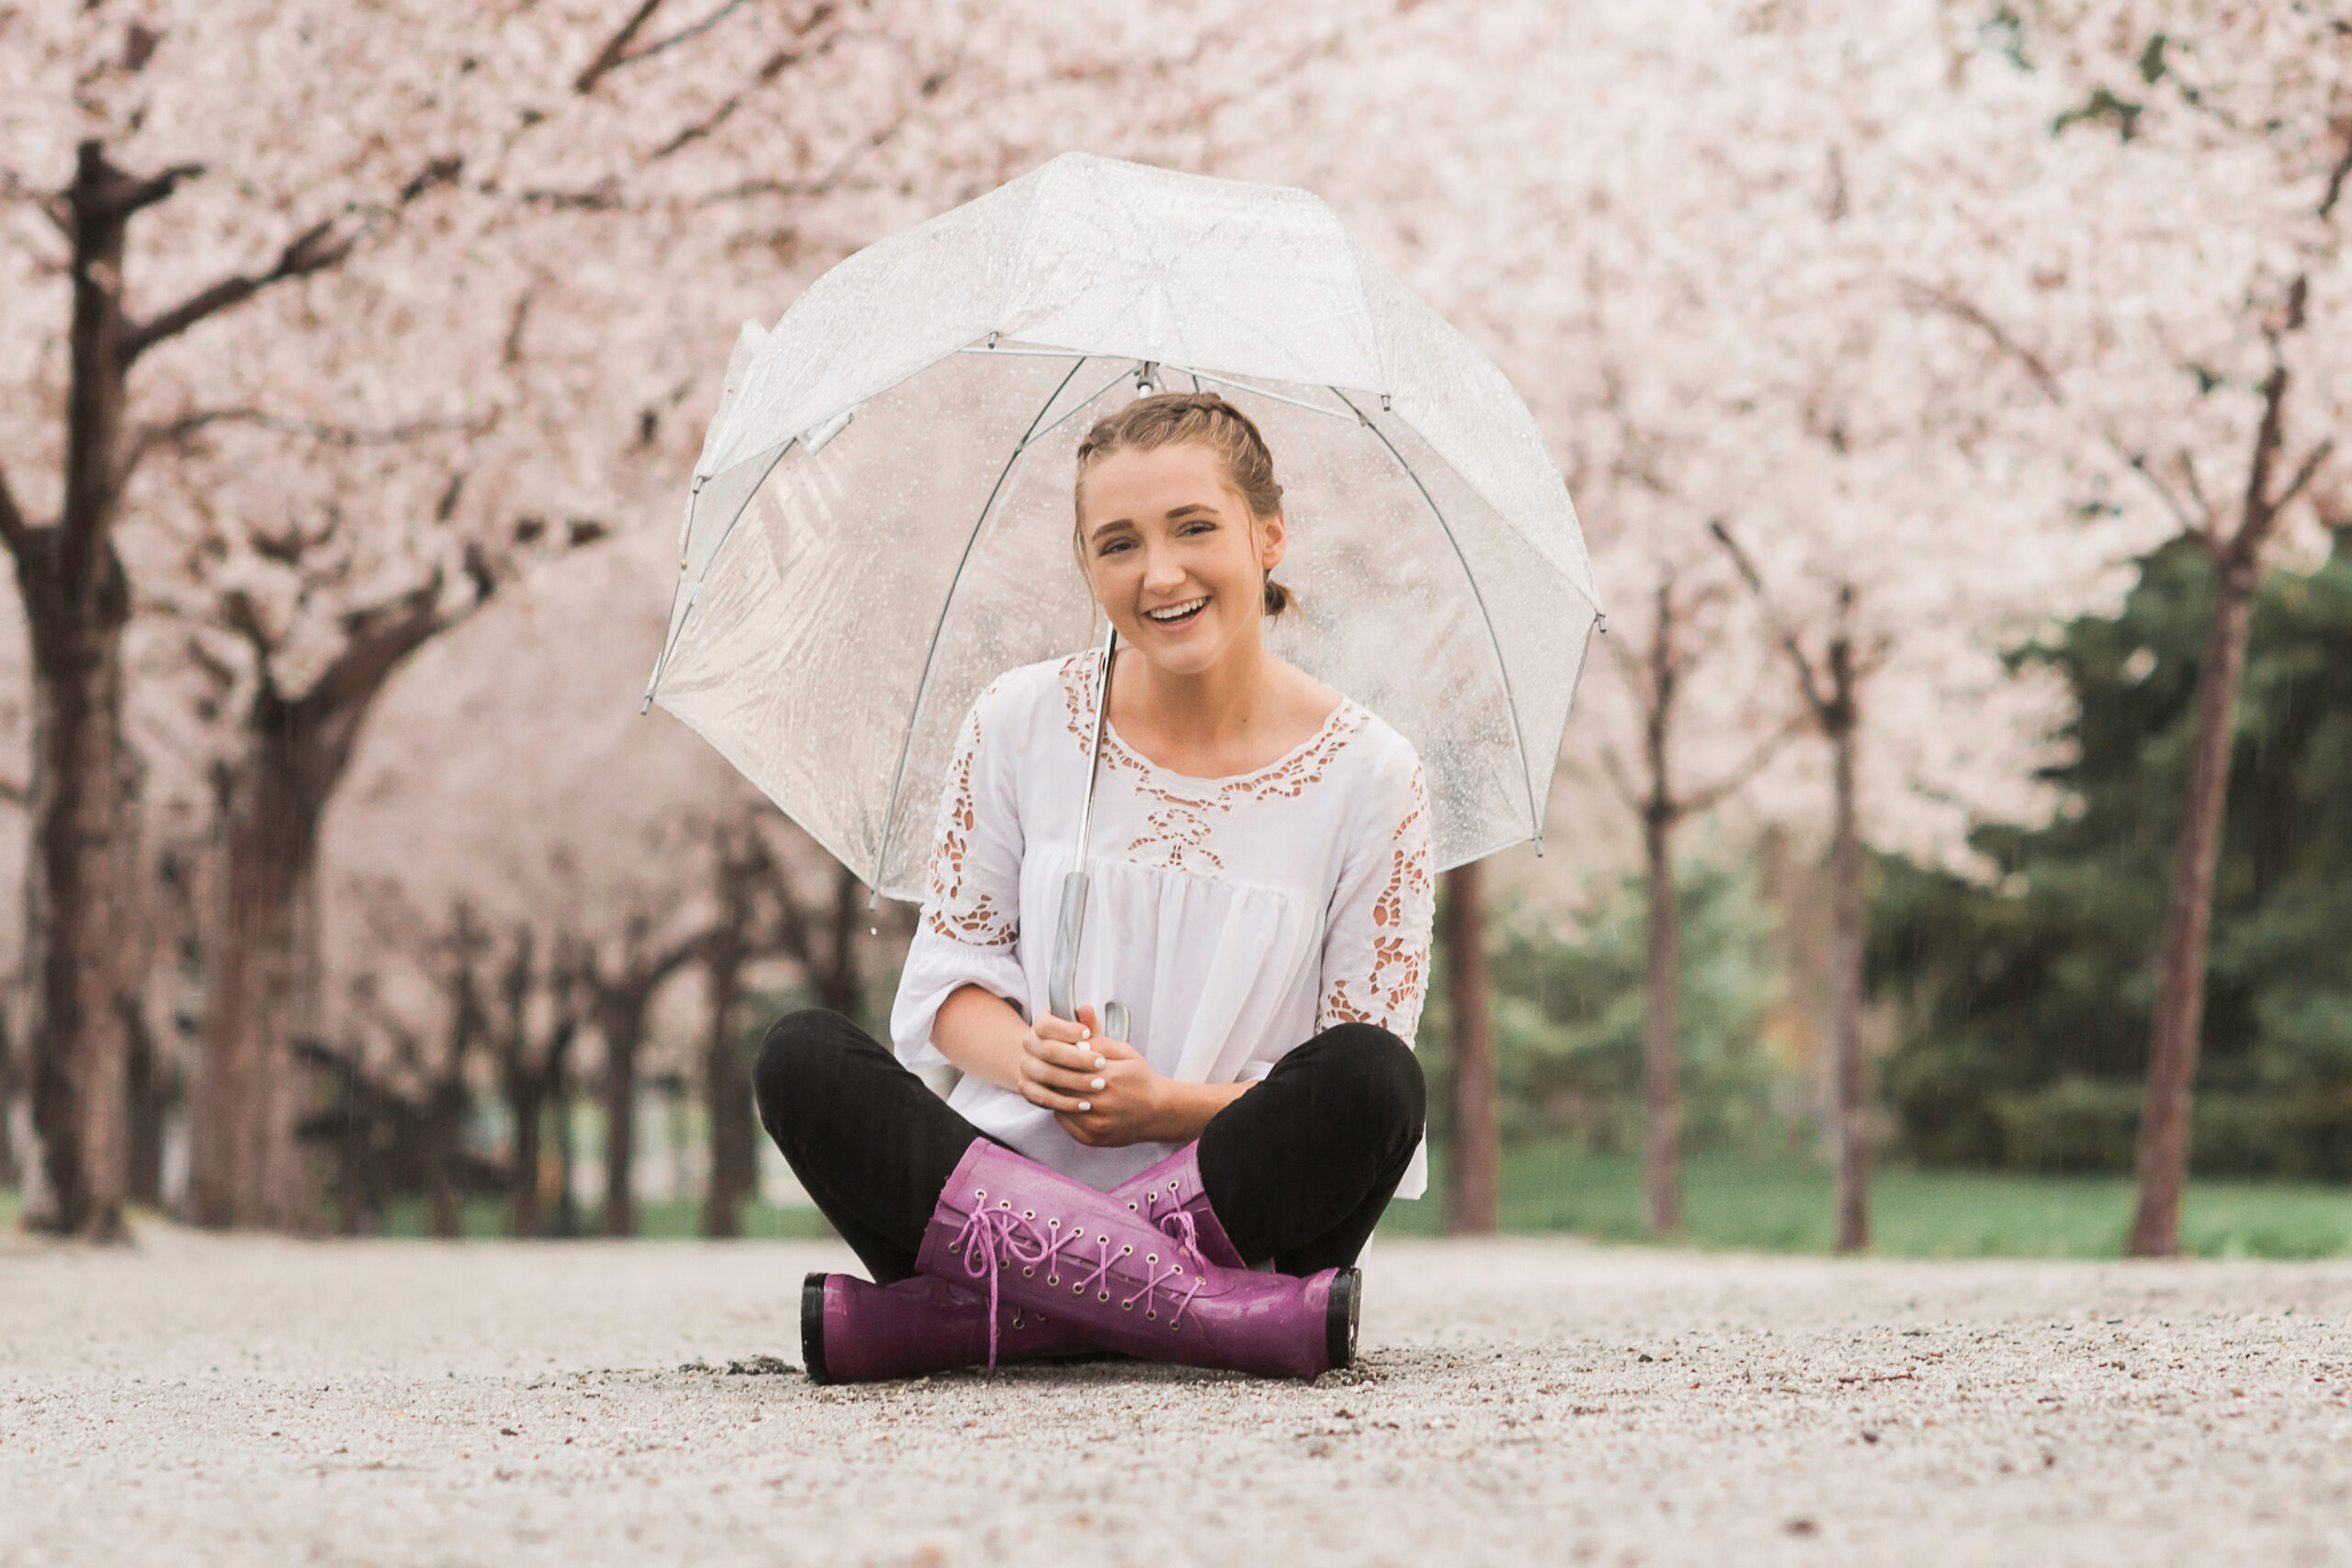 Senior portraits in the blossoms with umbrella